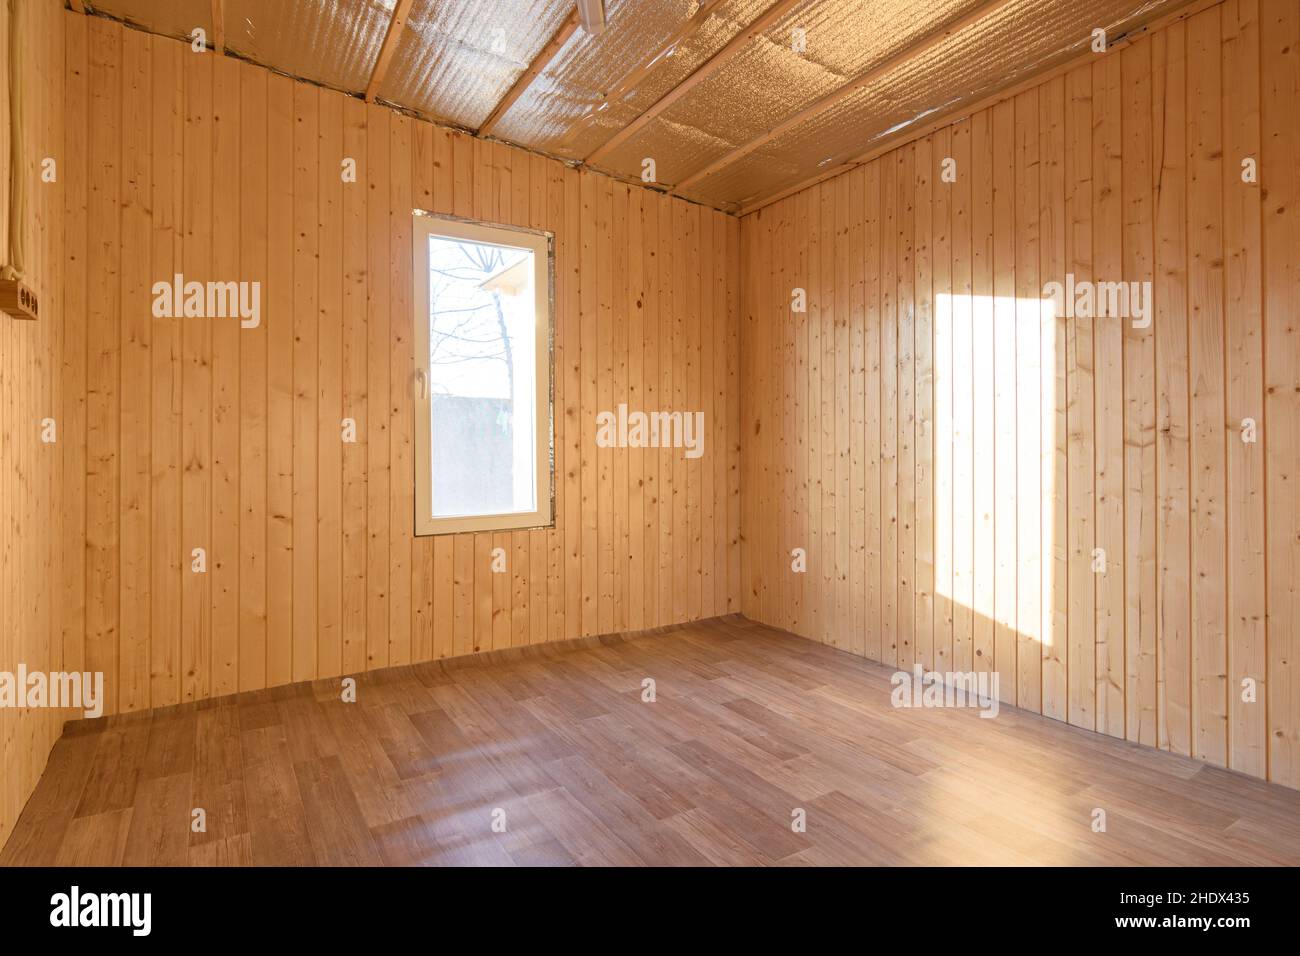 inside, wood panelling, window light, insides Stock Photo